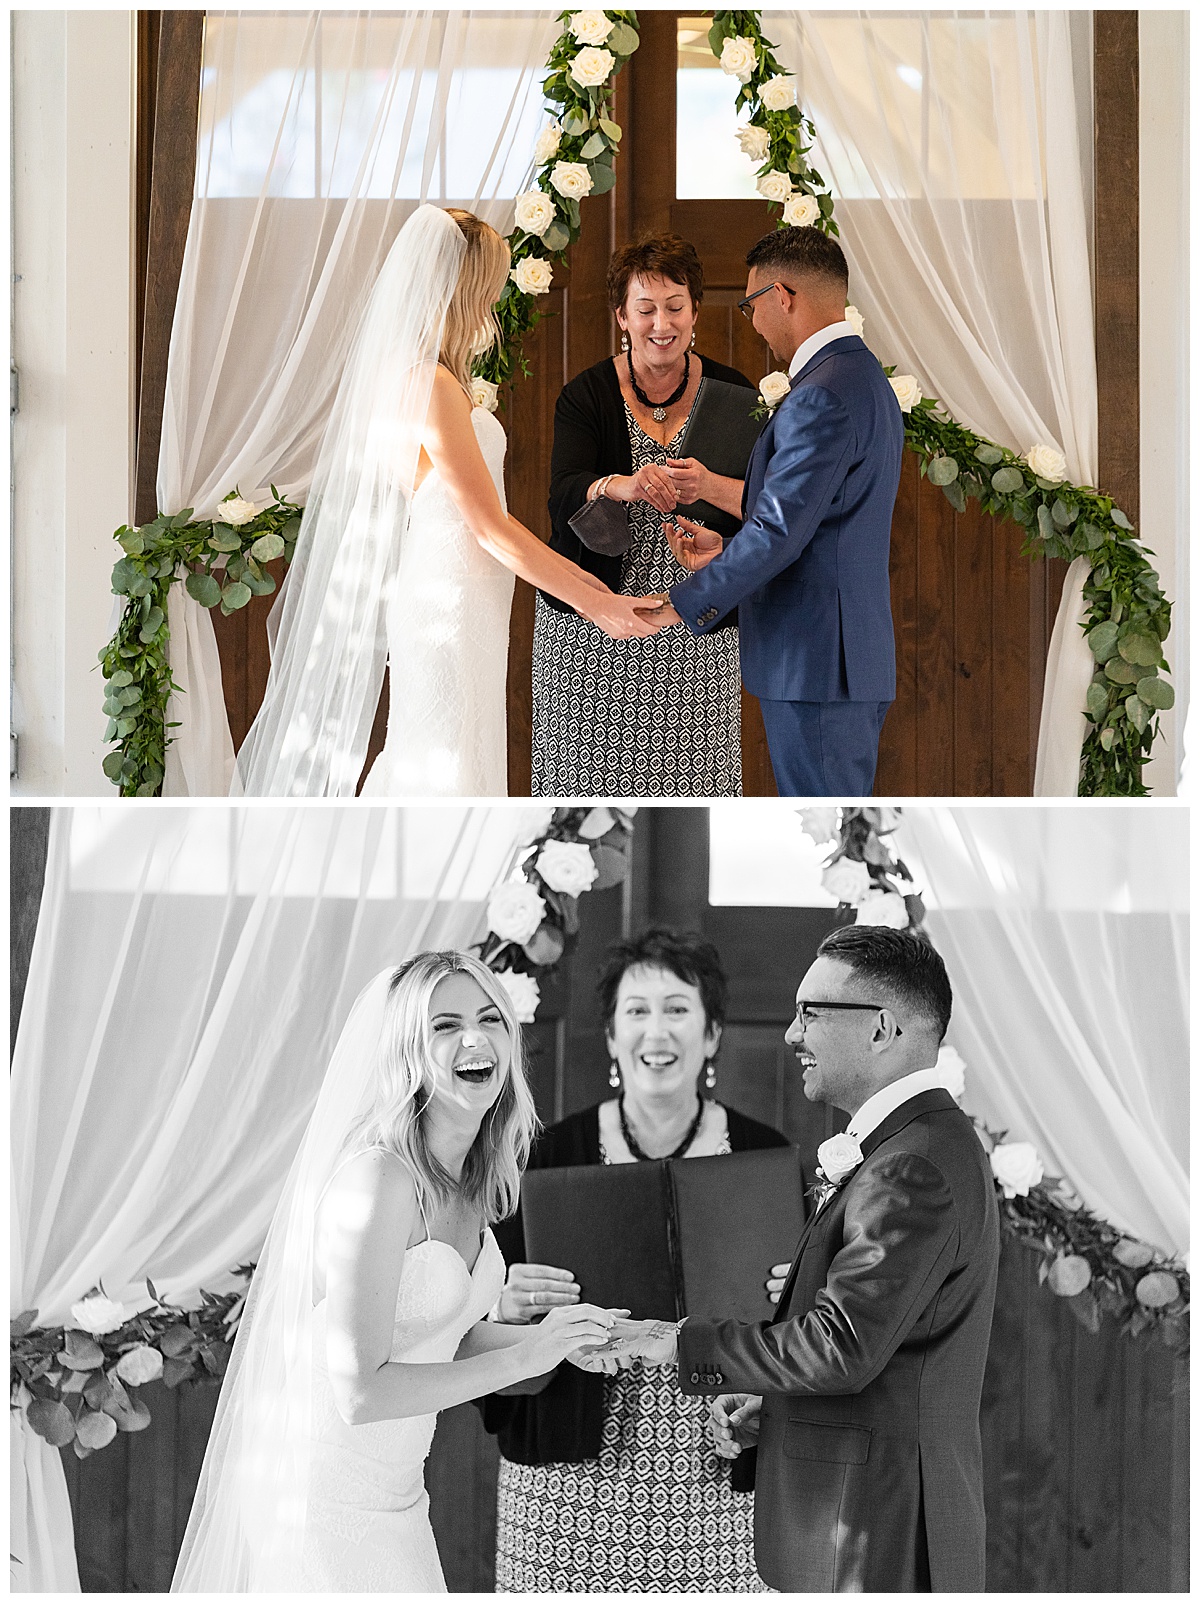 Stefanie Kamerman Photography - Tori and Jason - A White and Green 48 Fields Wedding - Leesburg, VA_0018.jpg